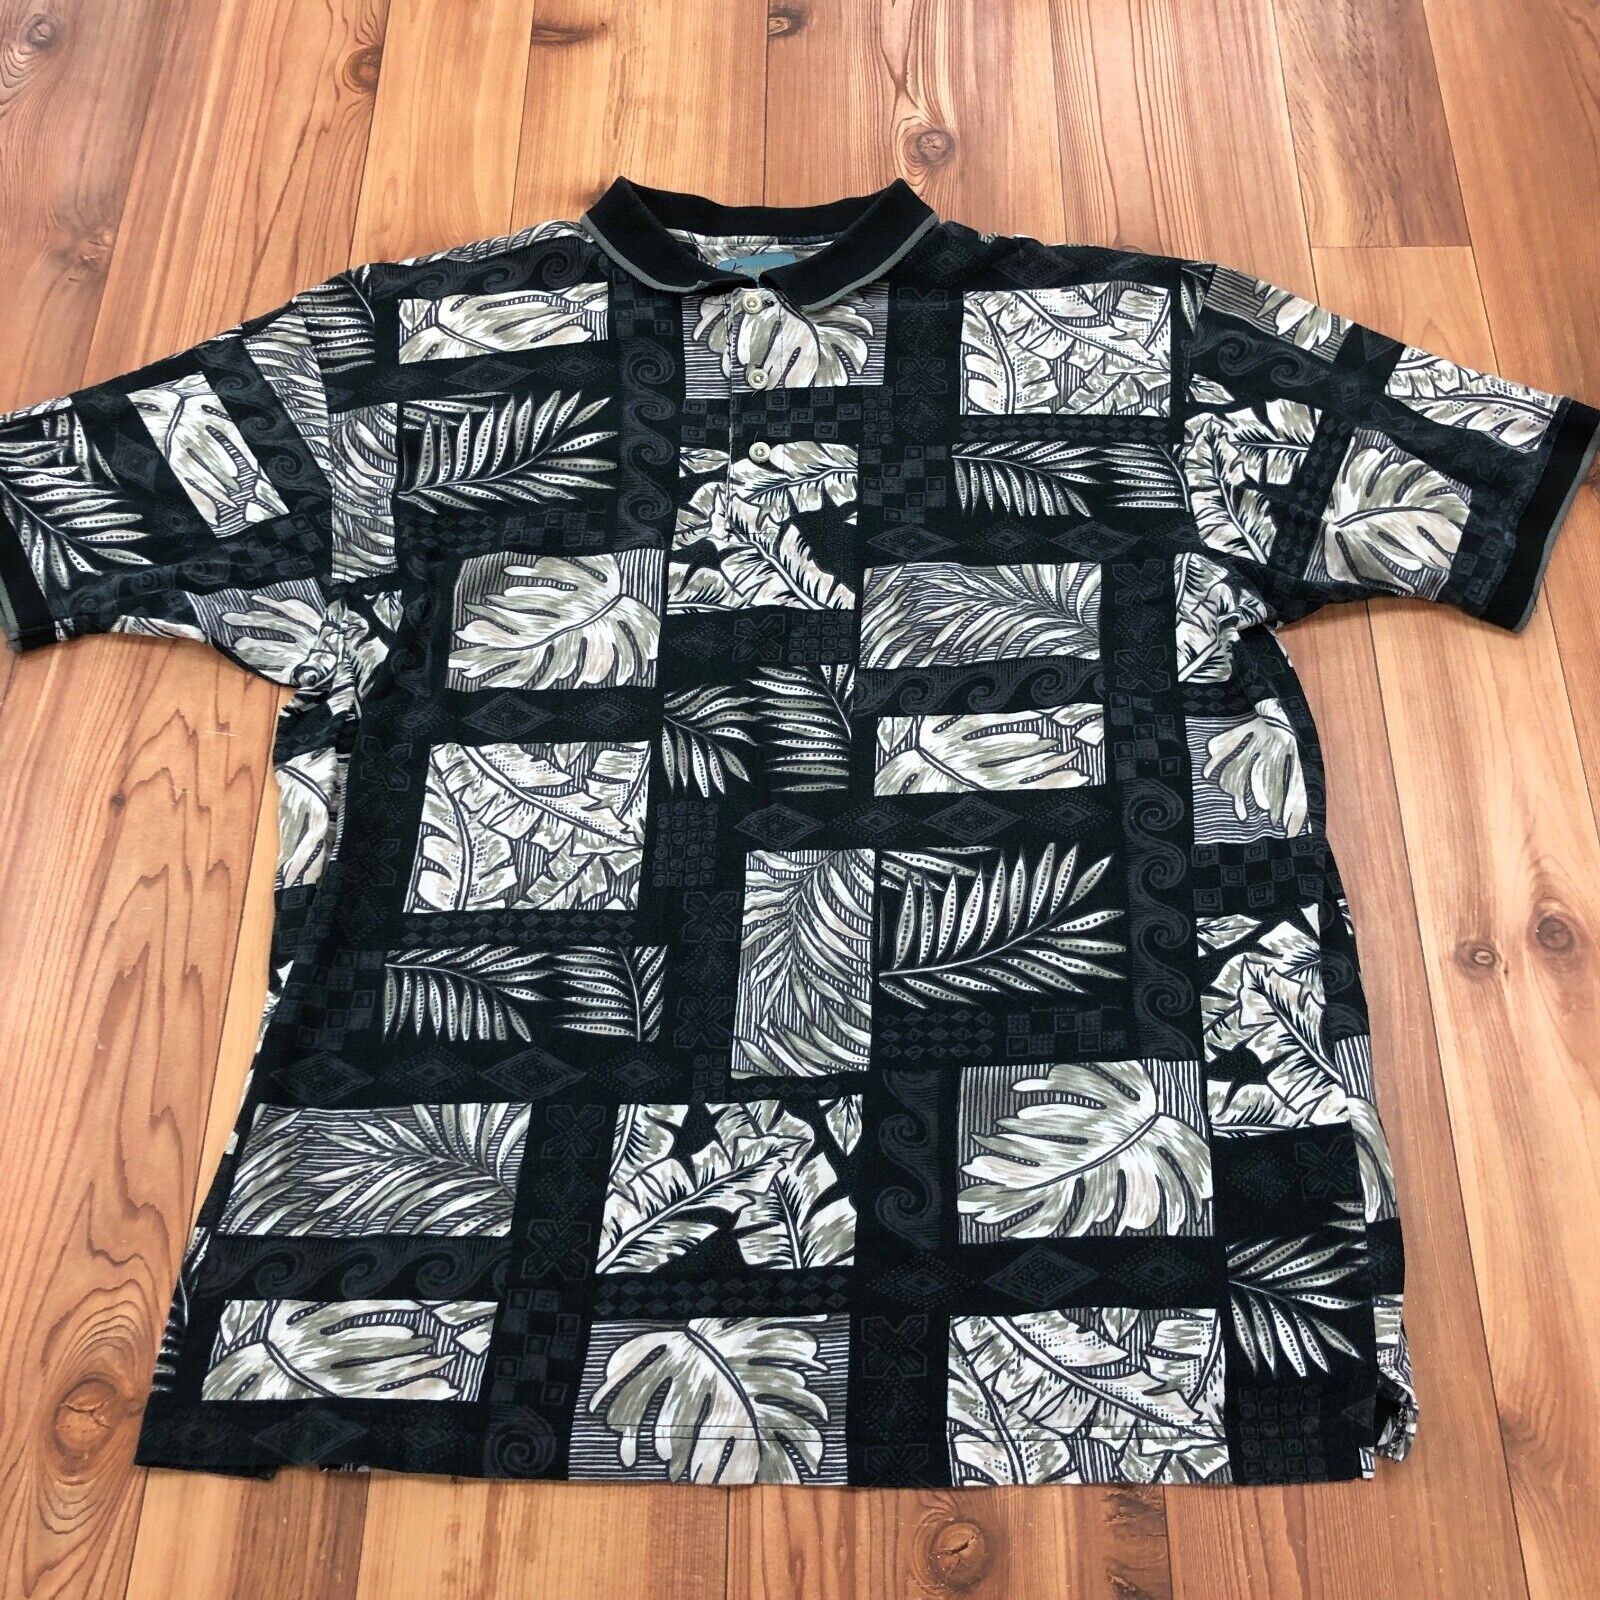 Kaylua Bay Black Tan Hawaiian Graphic Short Sleeve Polo Style Shirt Men Size XL